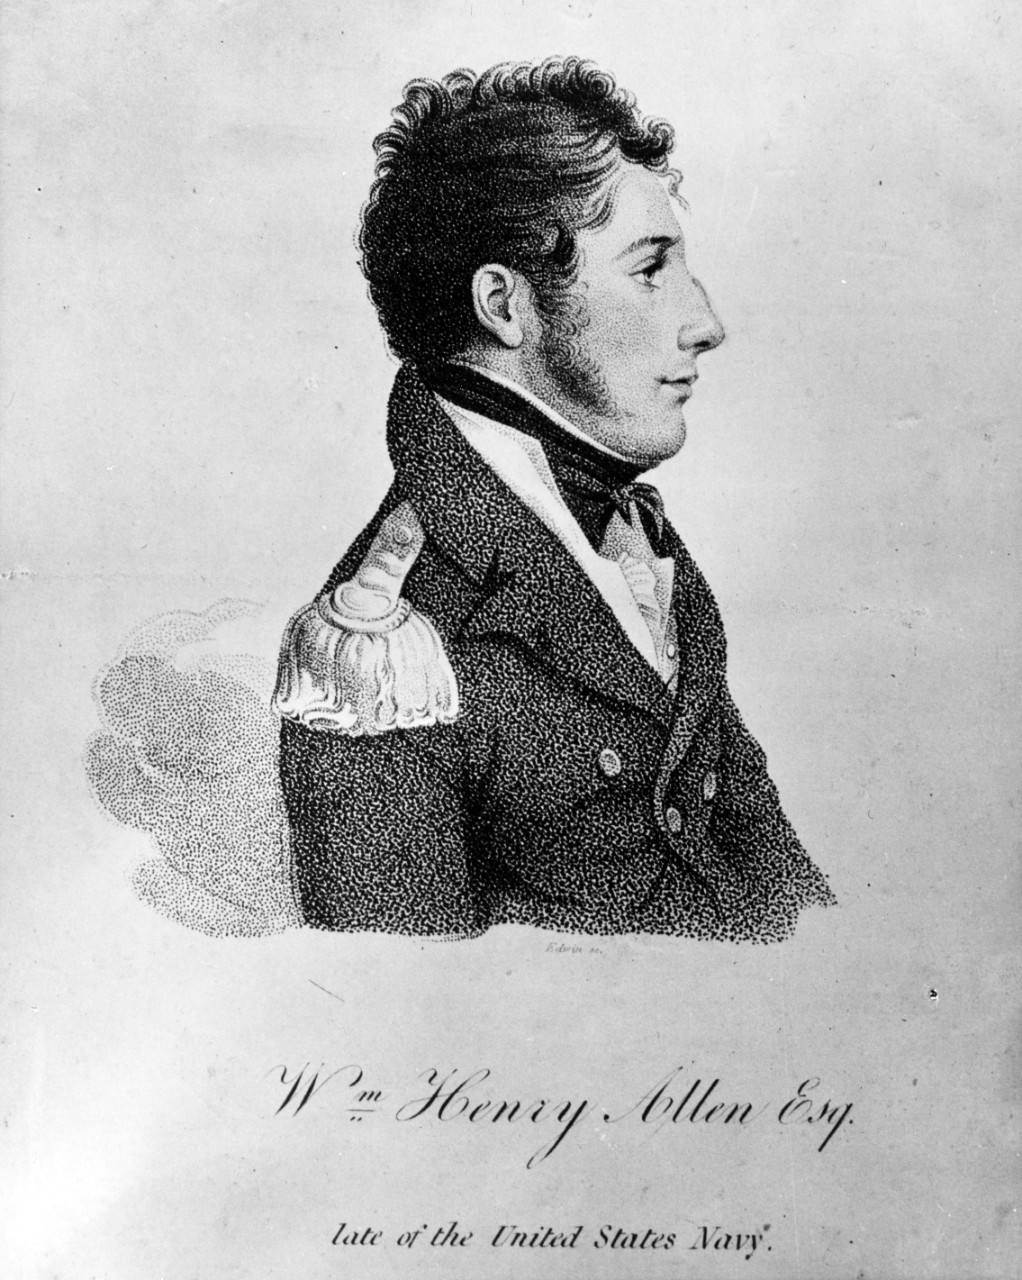 Photo #: NH 56025  Commander William Henry Allen, USN (1784-1813)  